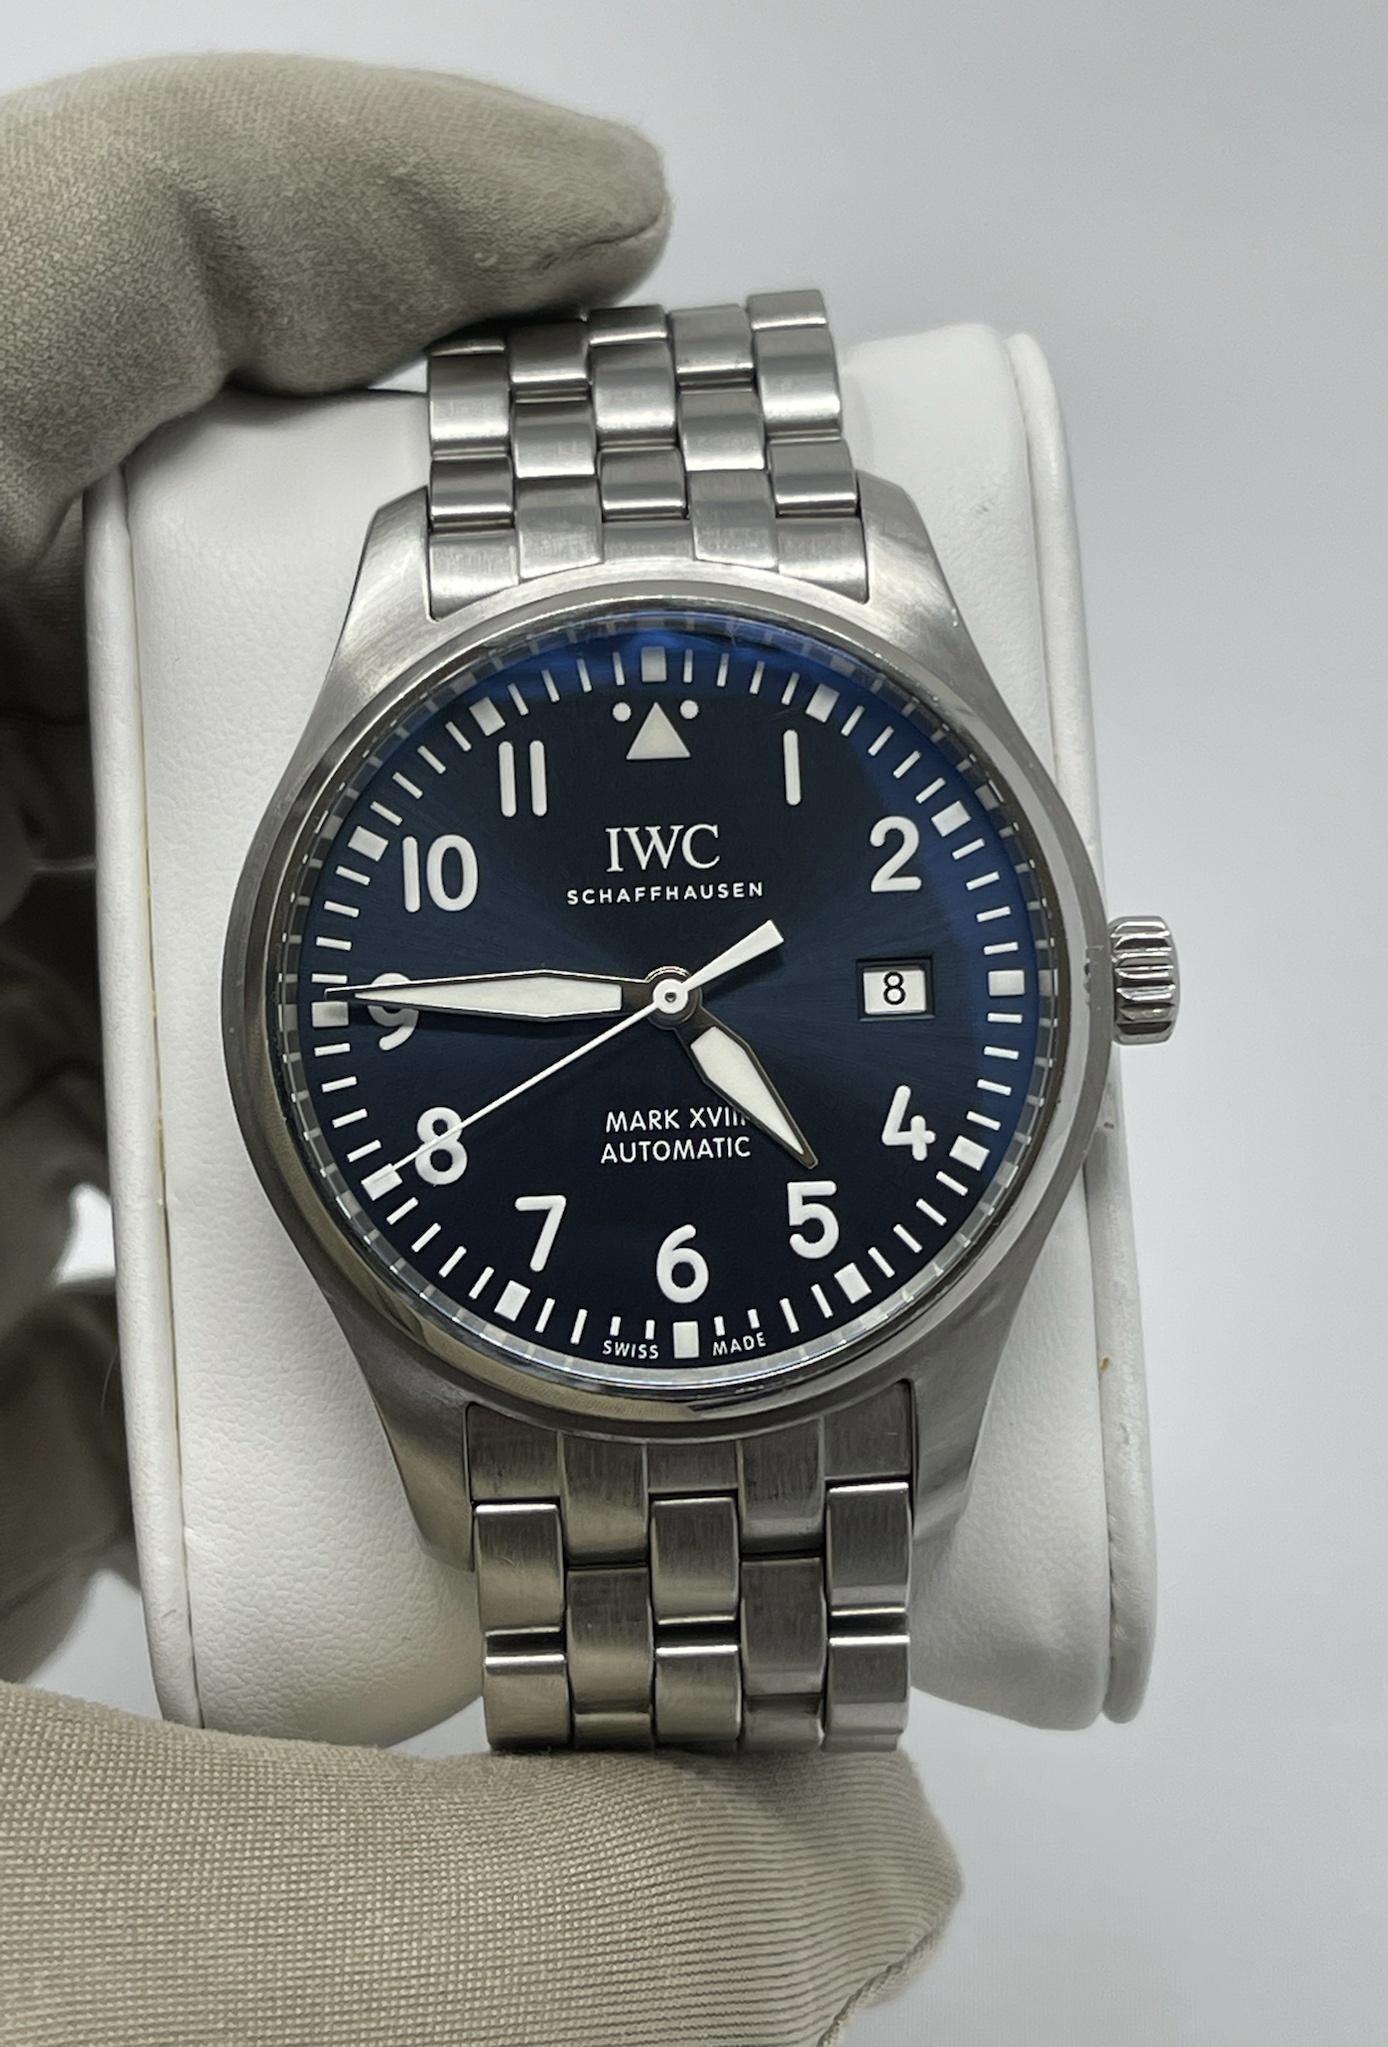 IWC Pilot Midnight Mark XVIII Le Petit Prince 40mm Men's Watch IW327004